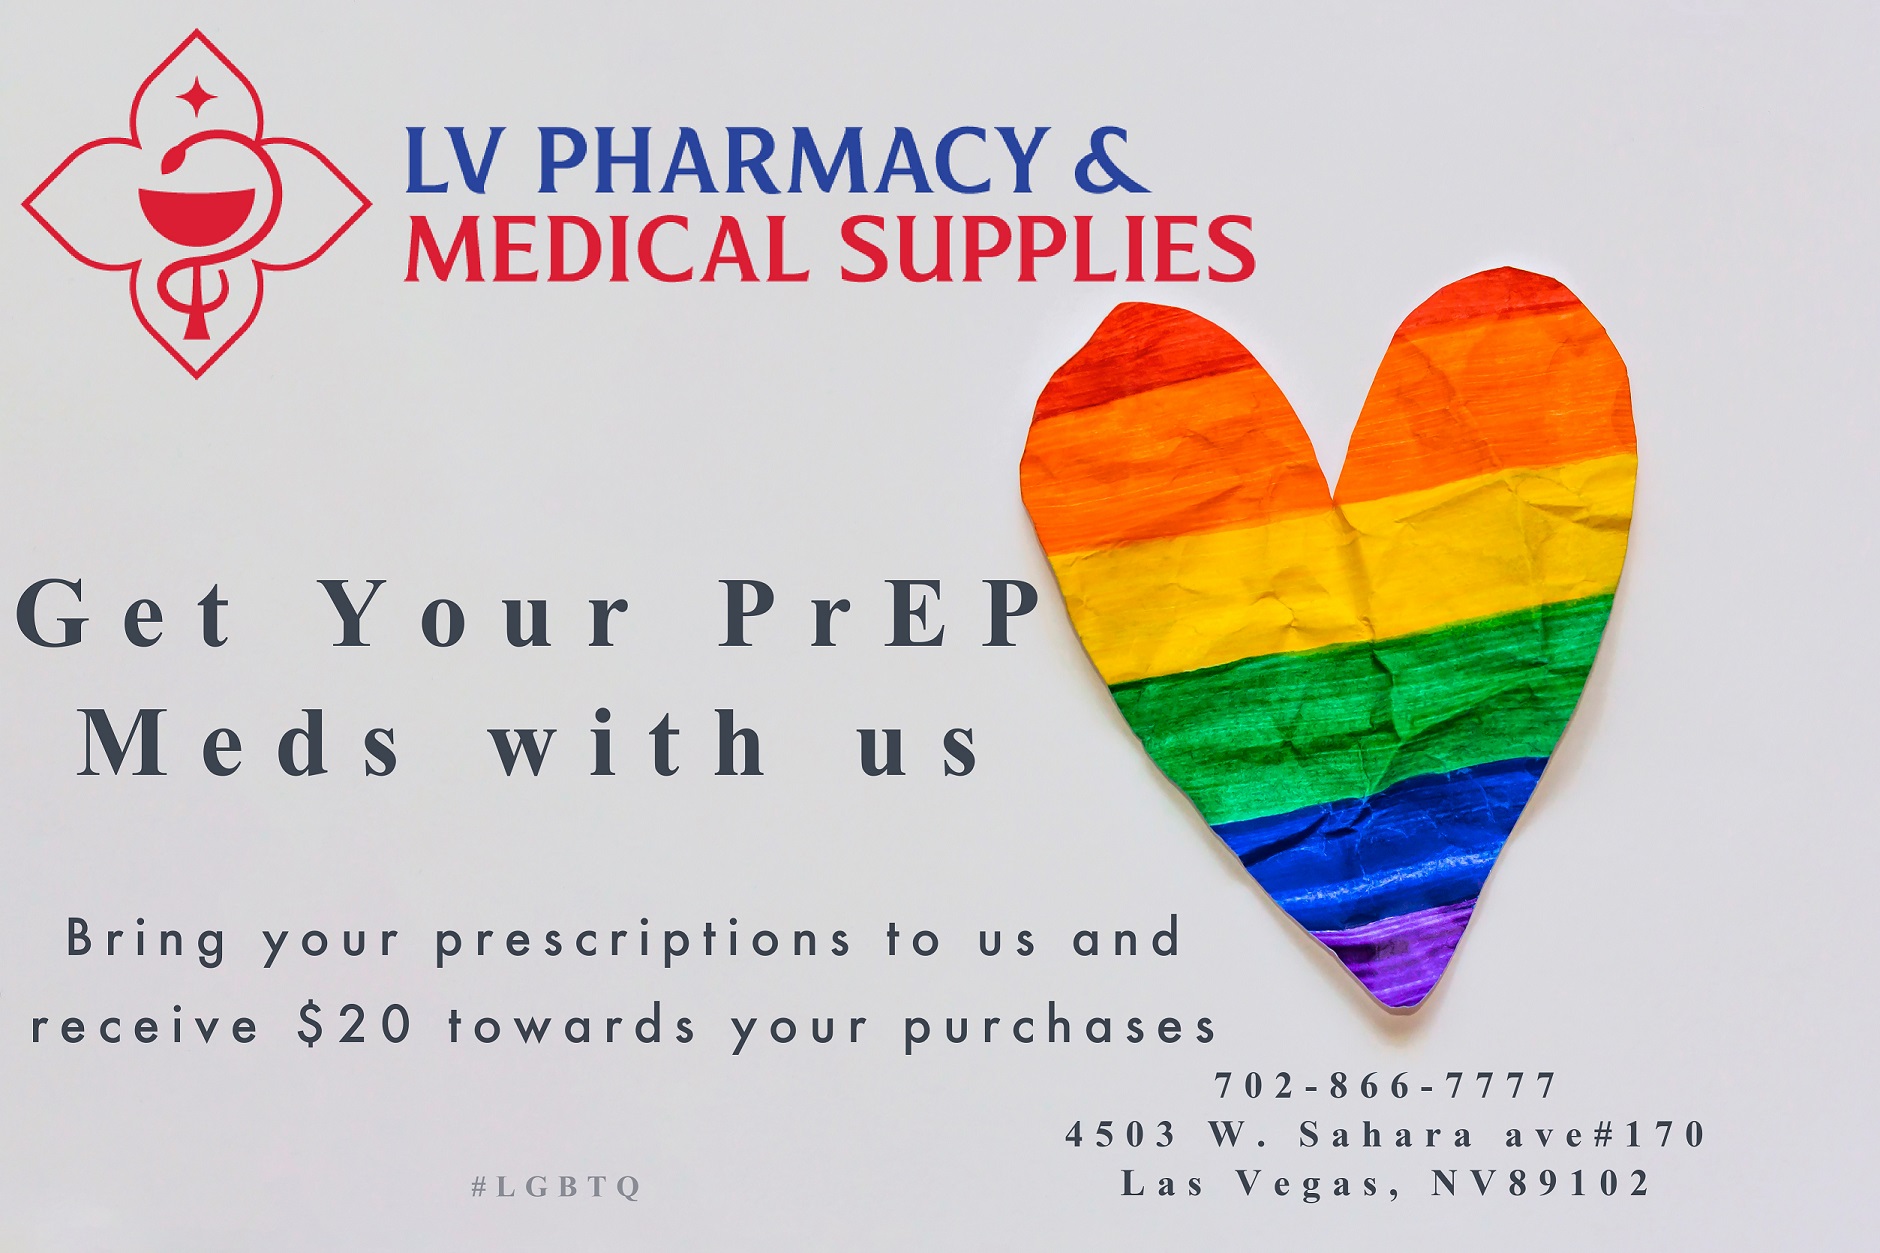 LGBTQ friendly Pharmacy